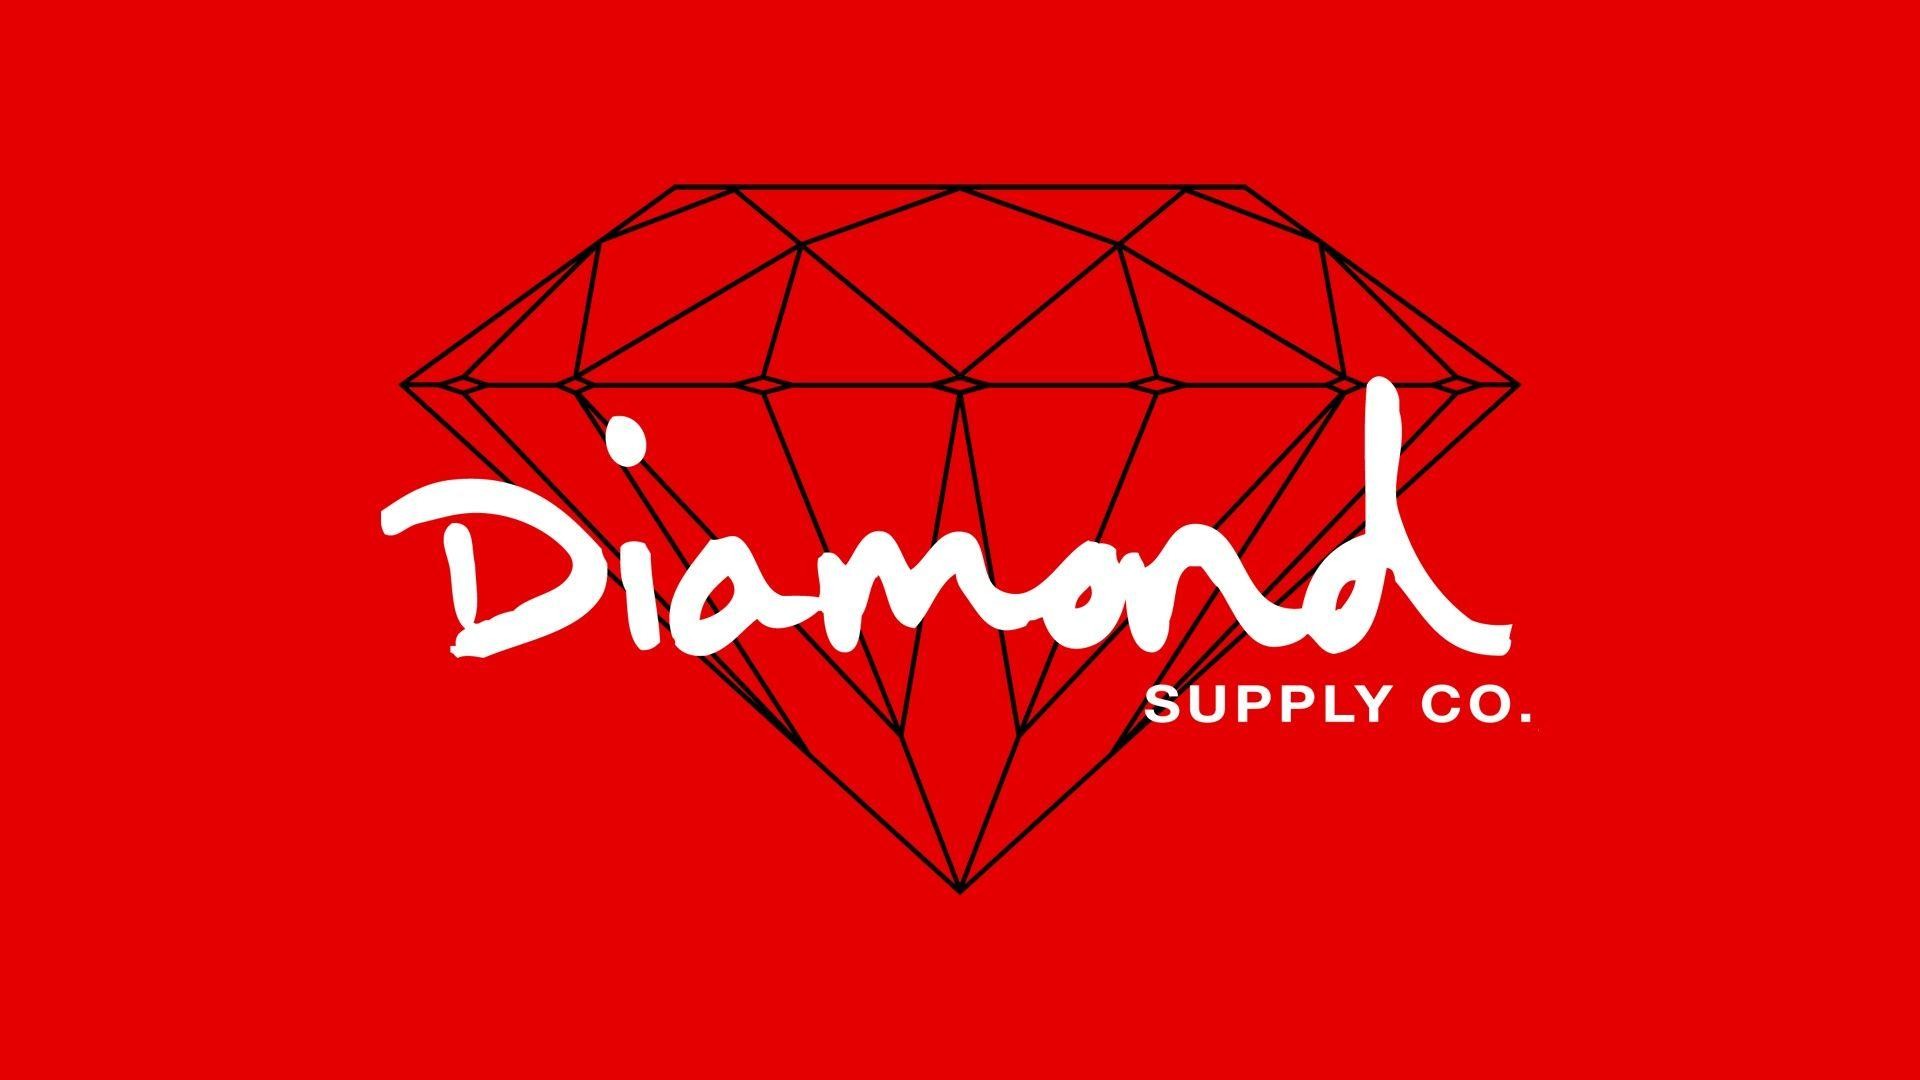 1920x1080 Best 25 Diamond supply co wallpaper ideas on Pinterest